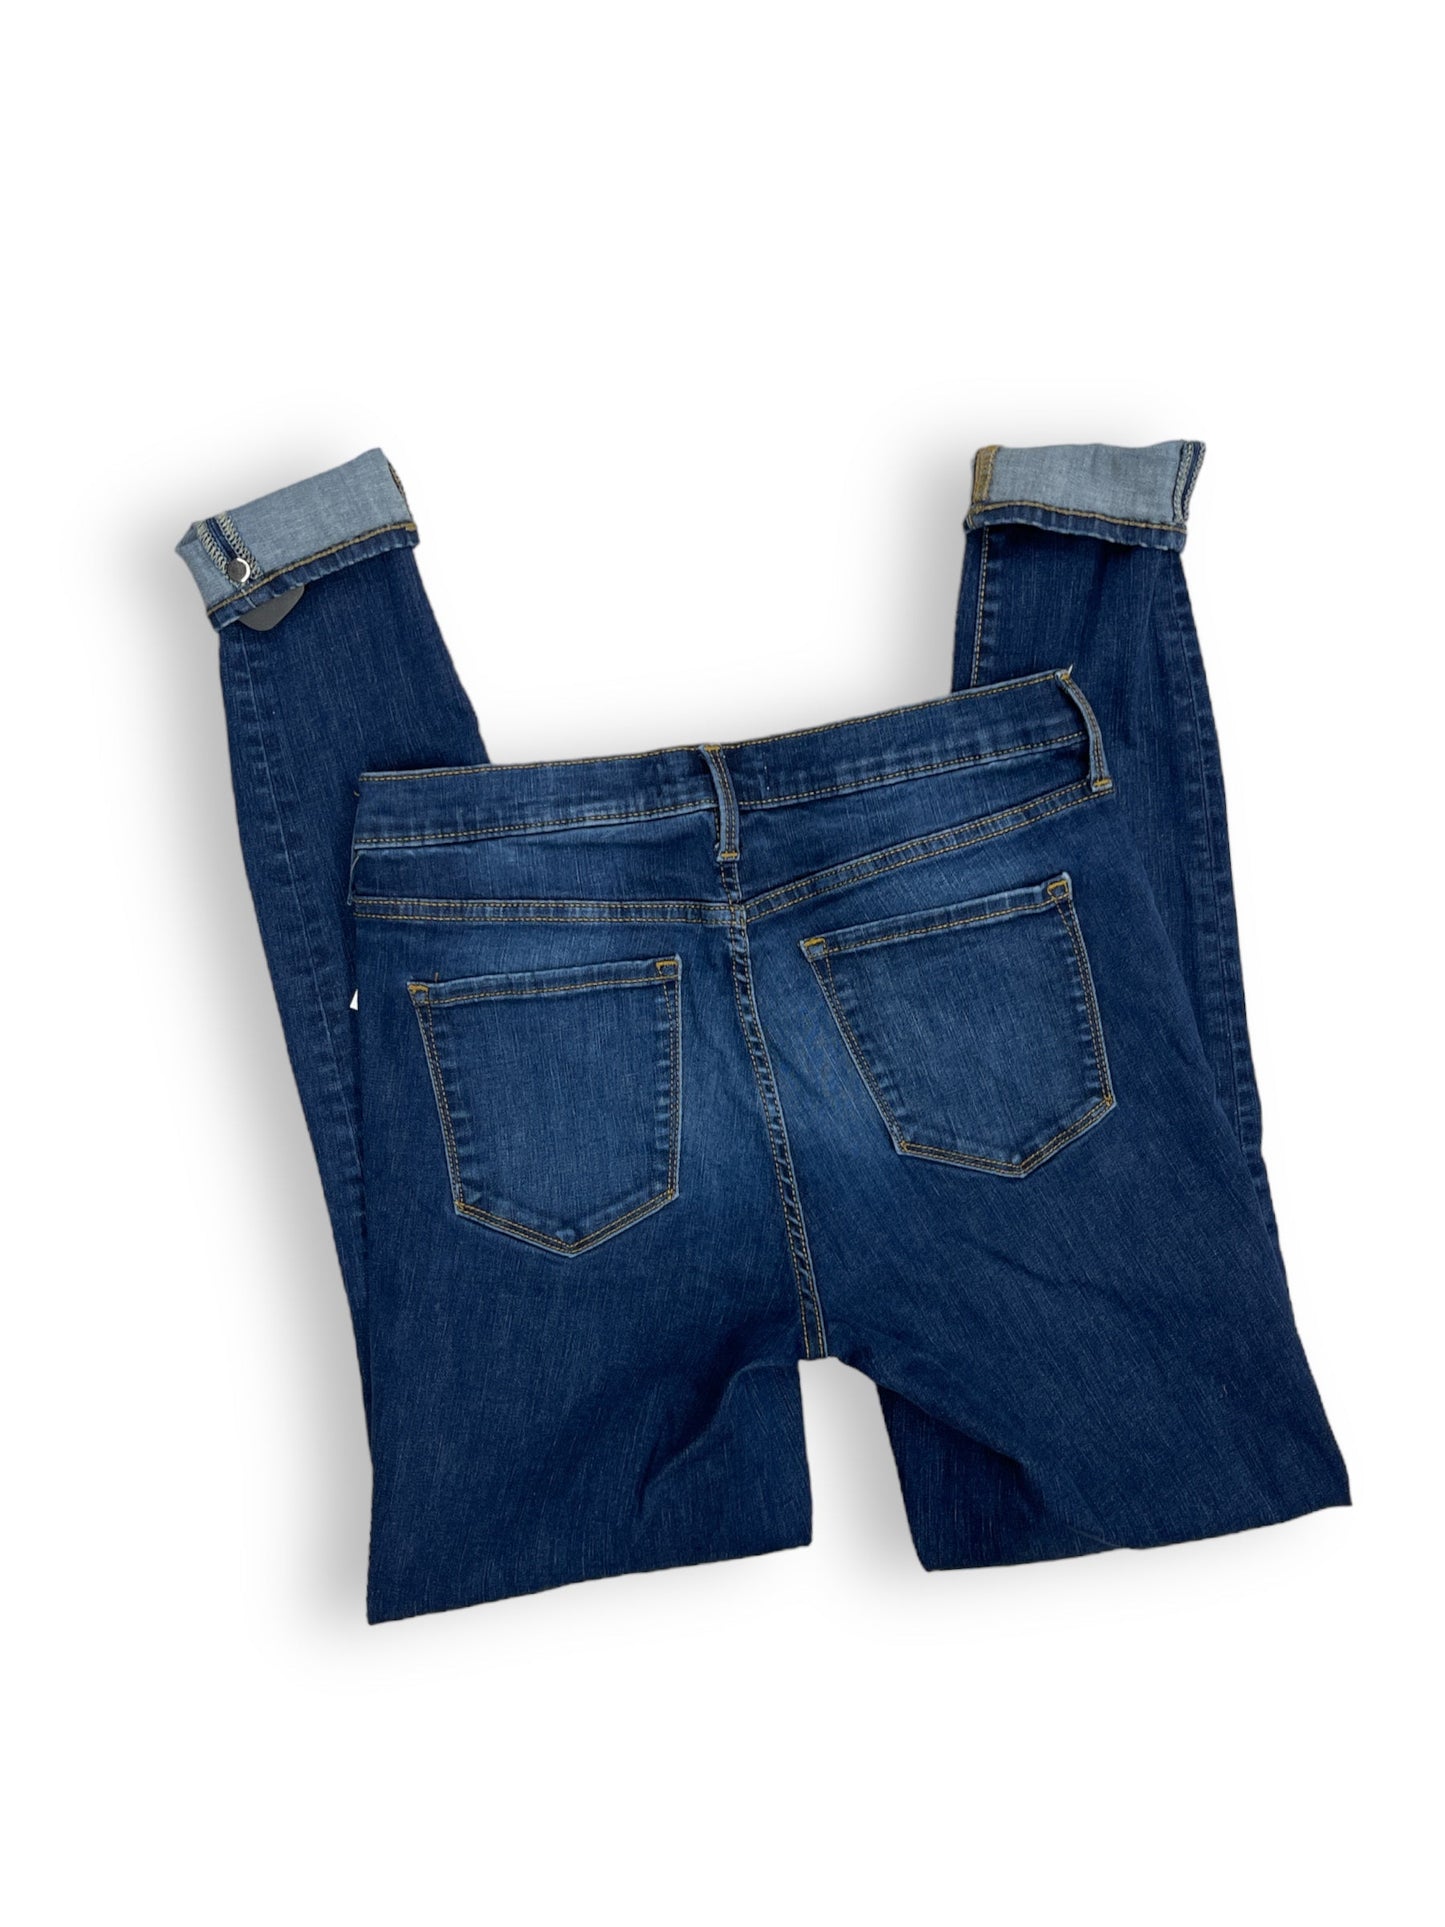 Jeans Skinny By Gap  Size: 30